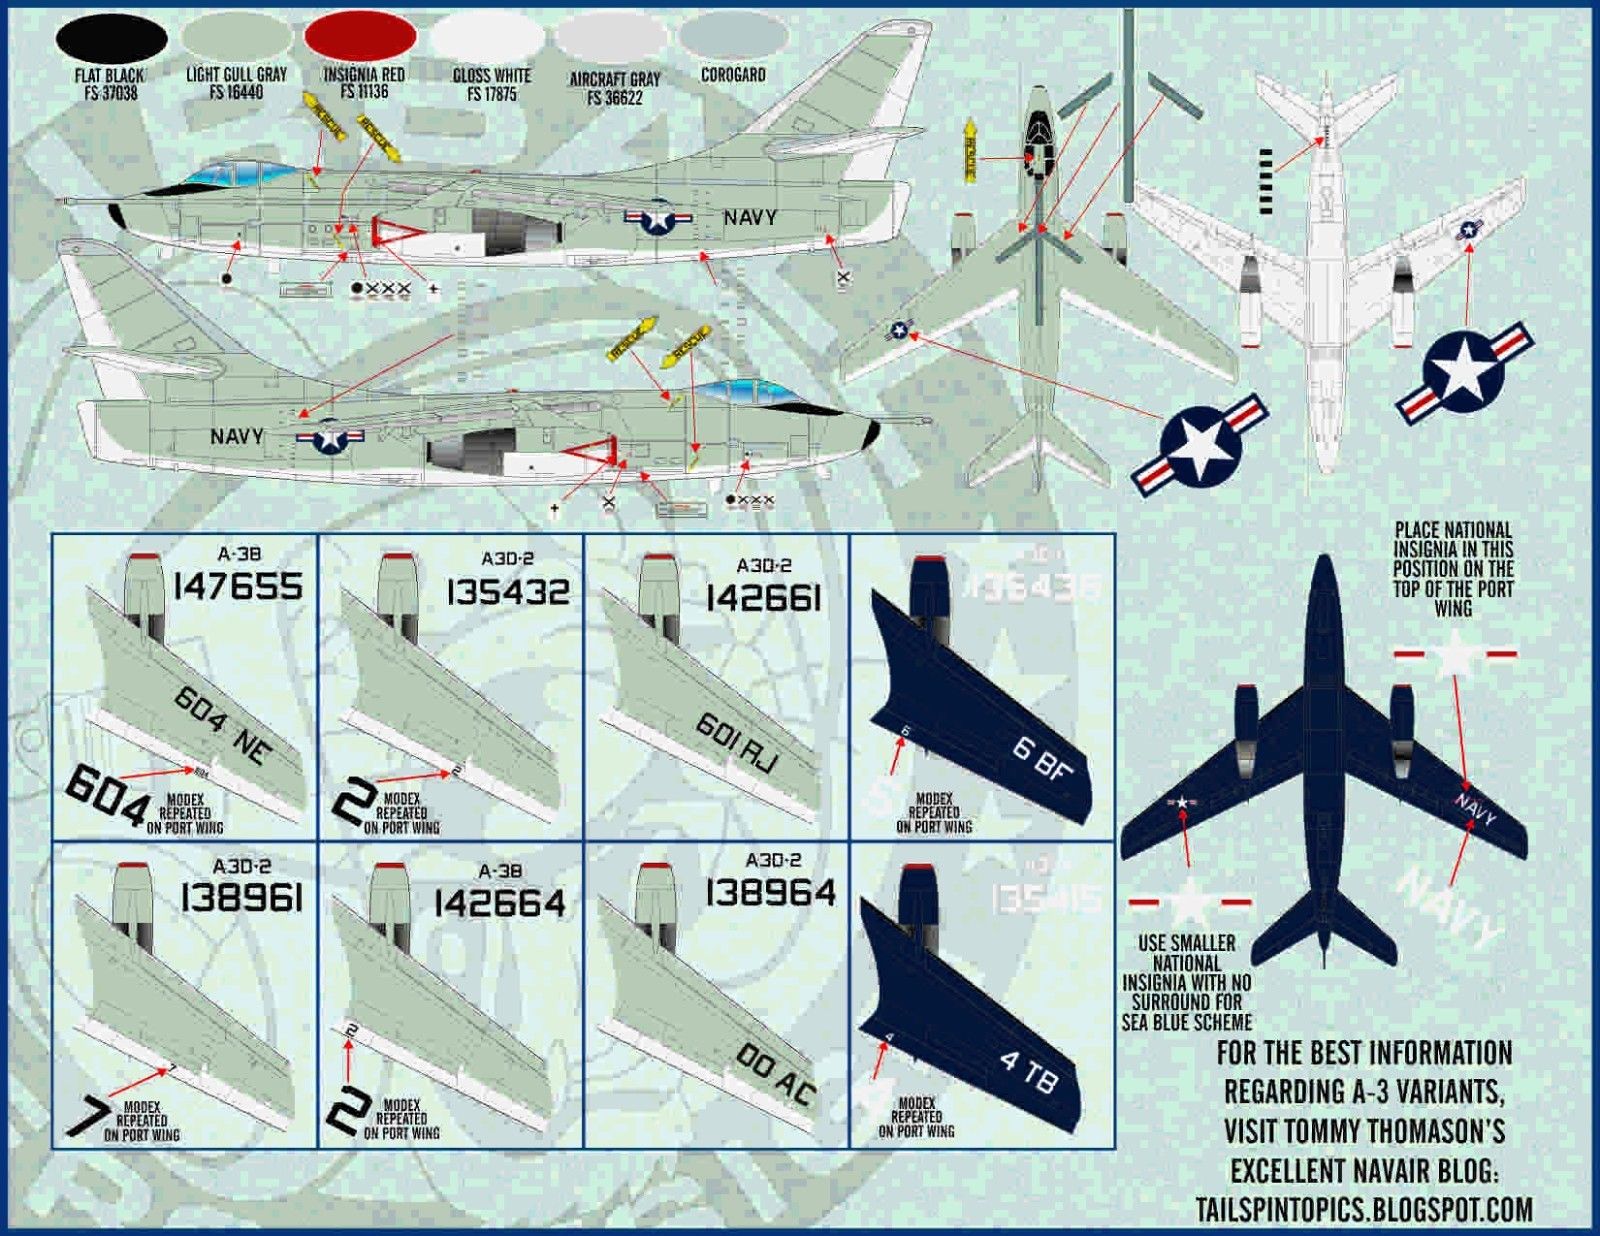 1/48 A3D-1/A3D-2/A3B/RA-3B 空中勇士攻击机"虎鲸"(1) - 点击图像关闭